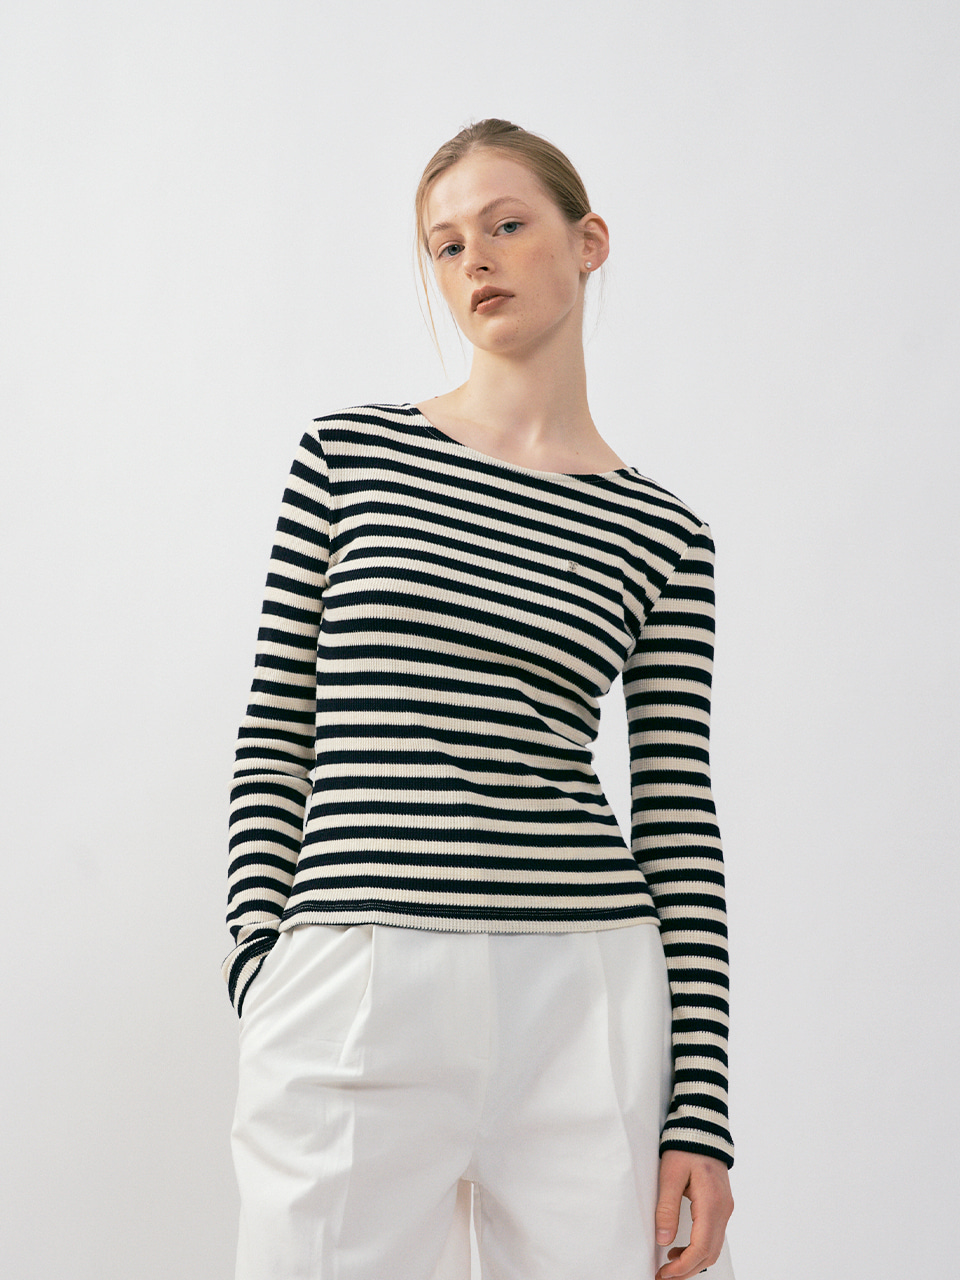 Boat Neck Stripe Sleeve T-shirt in ivory black보트넥 스트라이프 슬리브 티셔츠